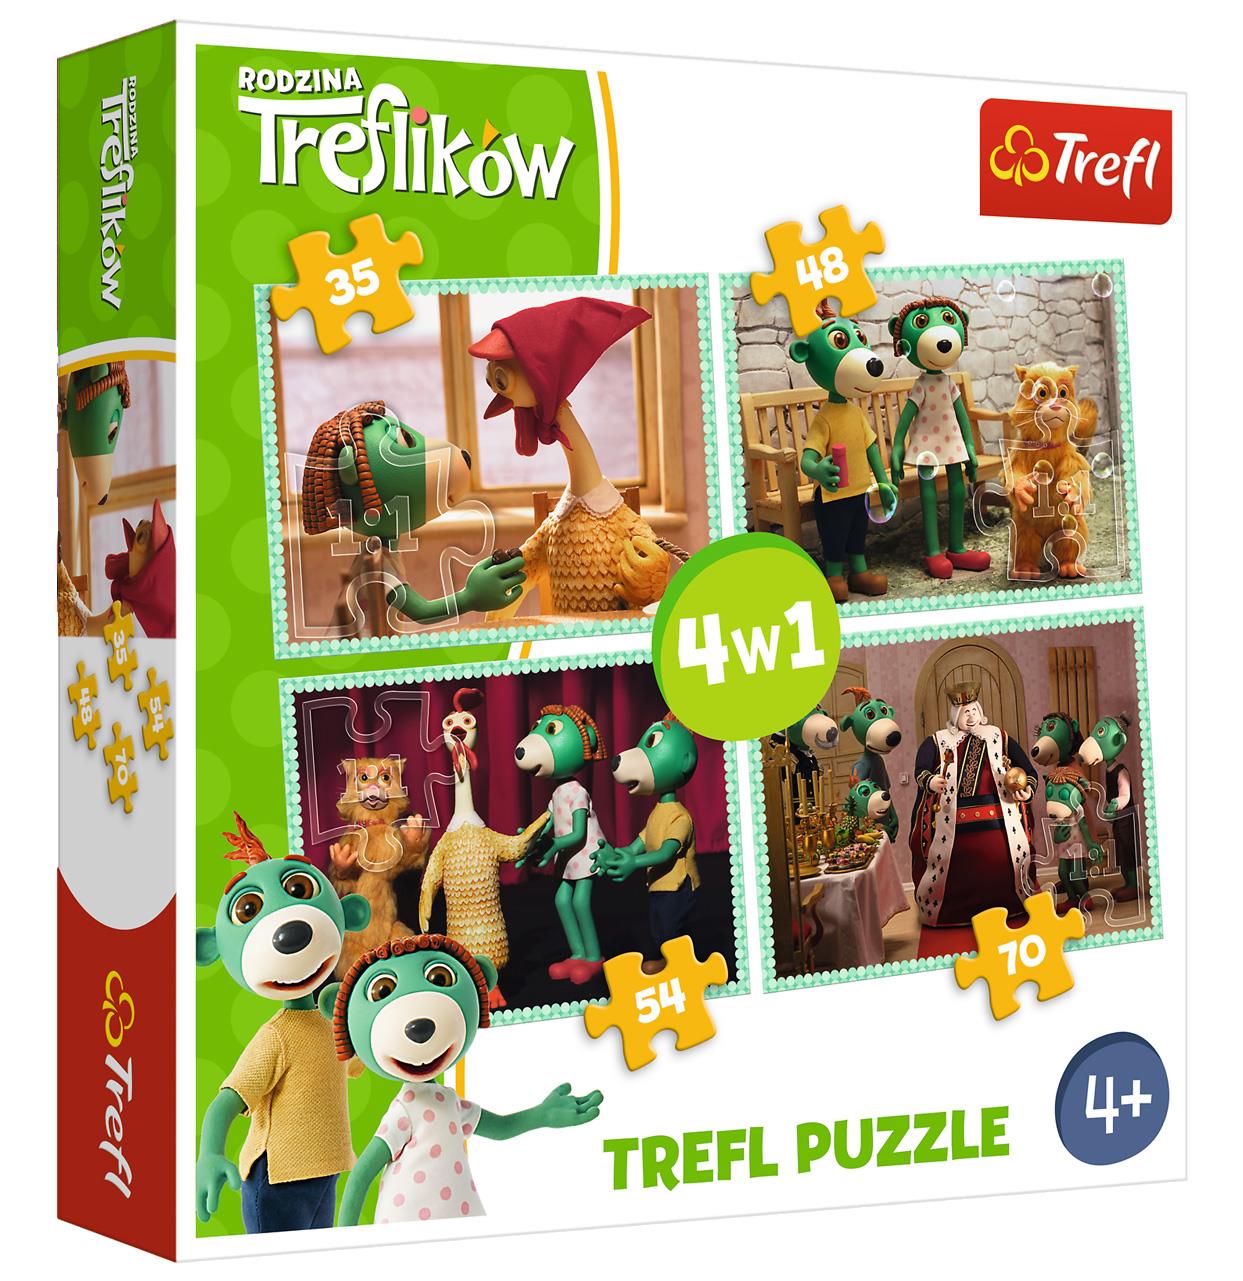 Trefl Çocuk Puzzle 34290 New Friends, Treflik Family, 35+48+54+70 Parça 4 in 1 Puzzle